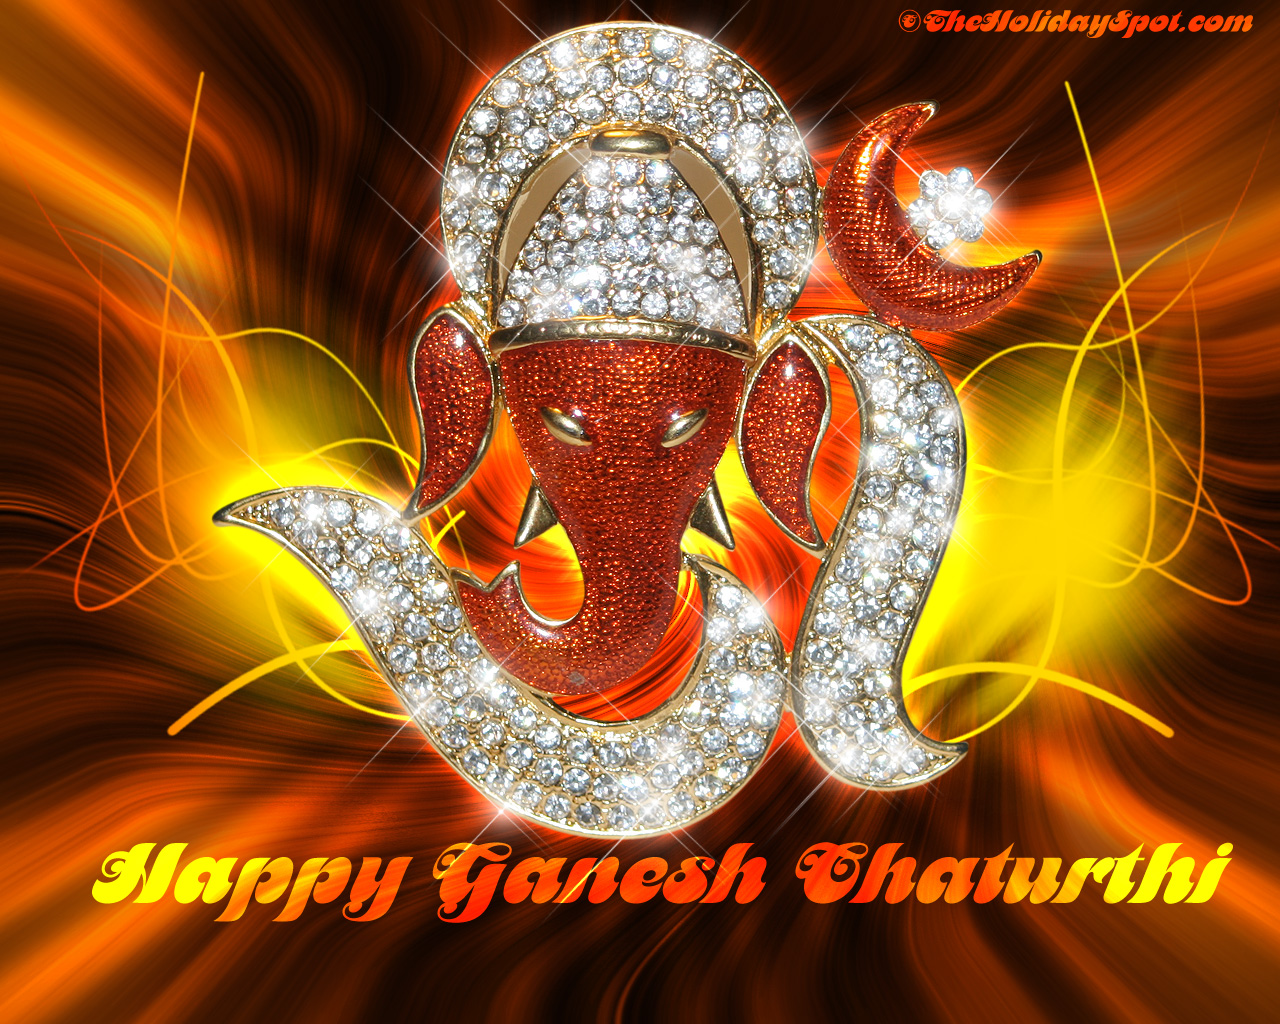 Lord Ganesha Wallpaper - Ganesh Chaturthi Images Free Download - 1280x1024  Wallpaper 